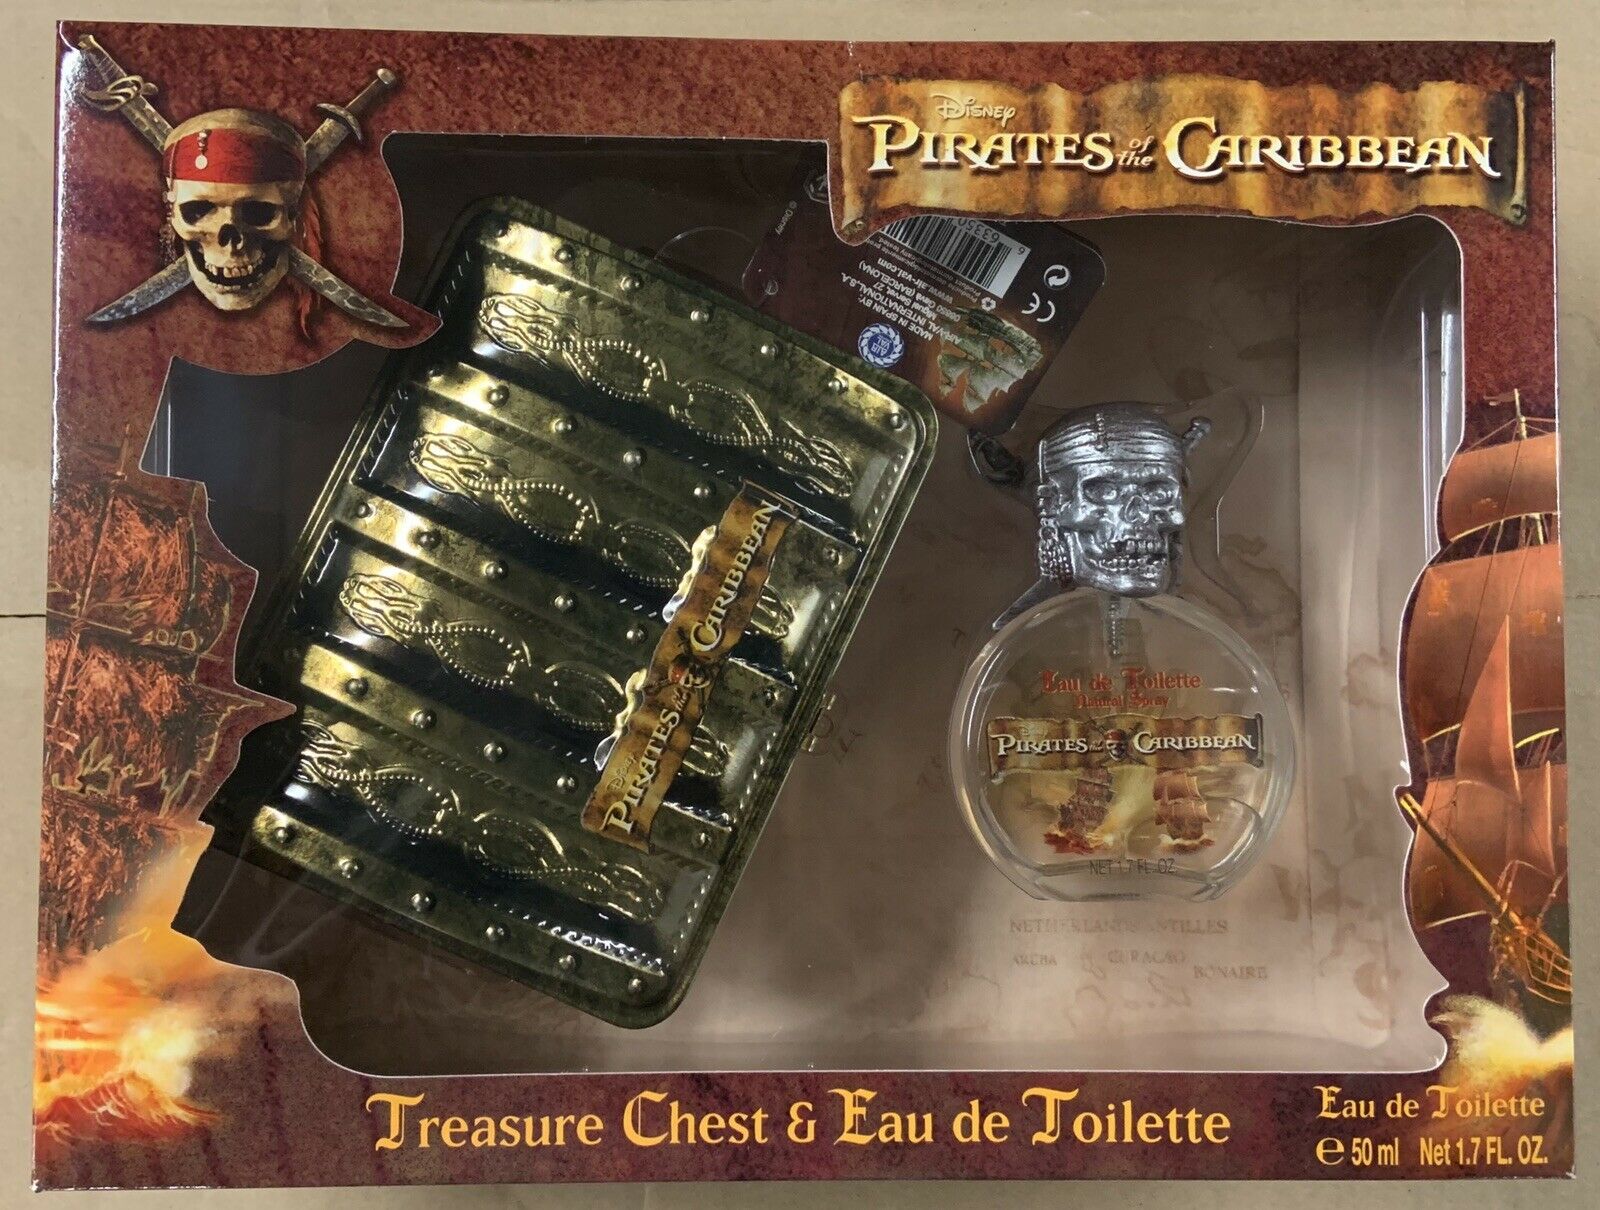 Pirates of the Caribbean by Disney Kids 4 Piece Gift Set (1.7 oz Eau de Toilette Spray + Treasure Chest + Padlock + 2 Keys) | FragranceBaba.com